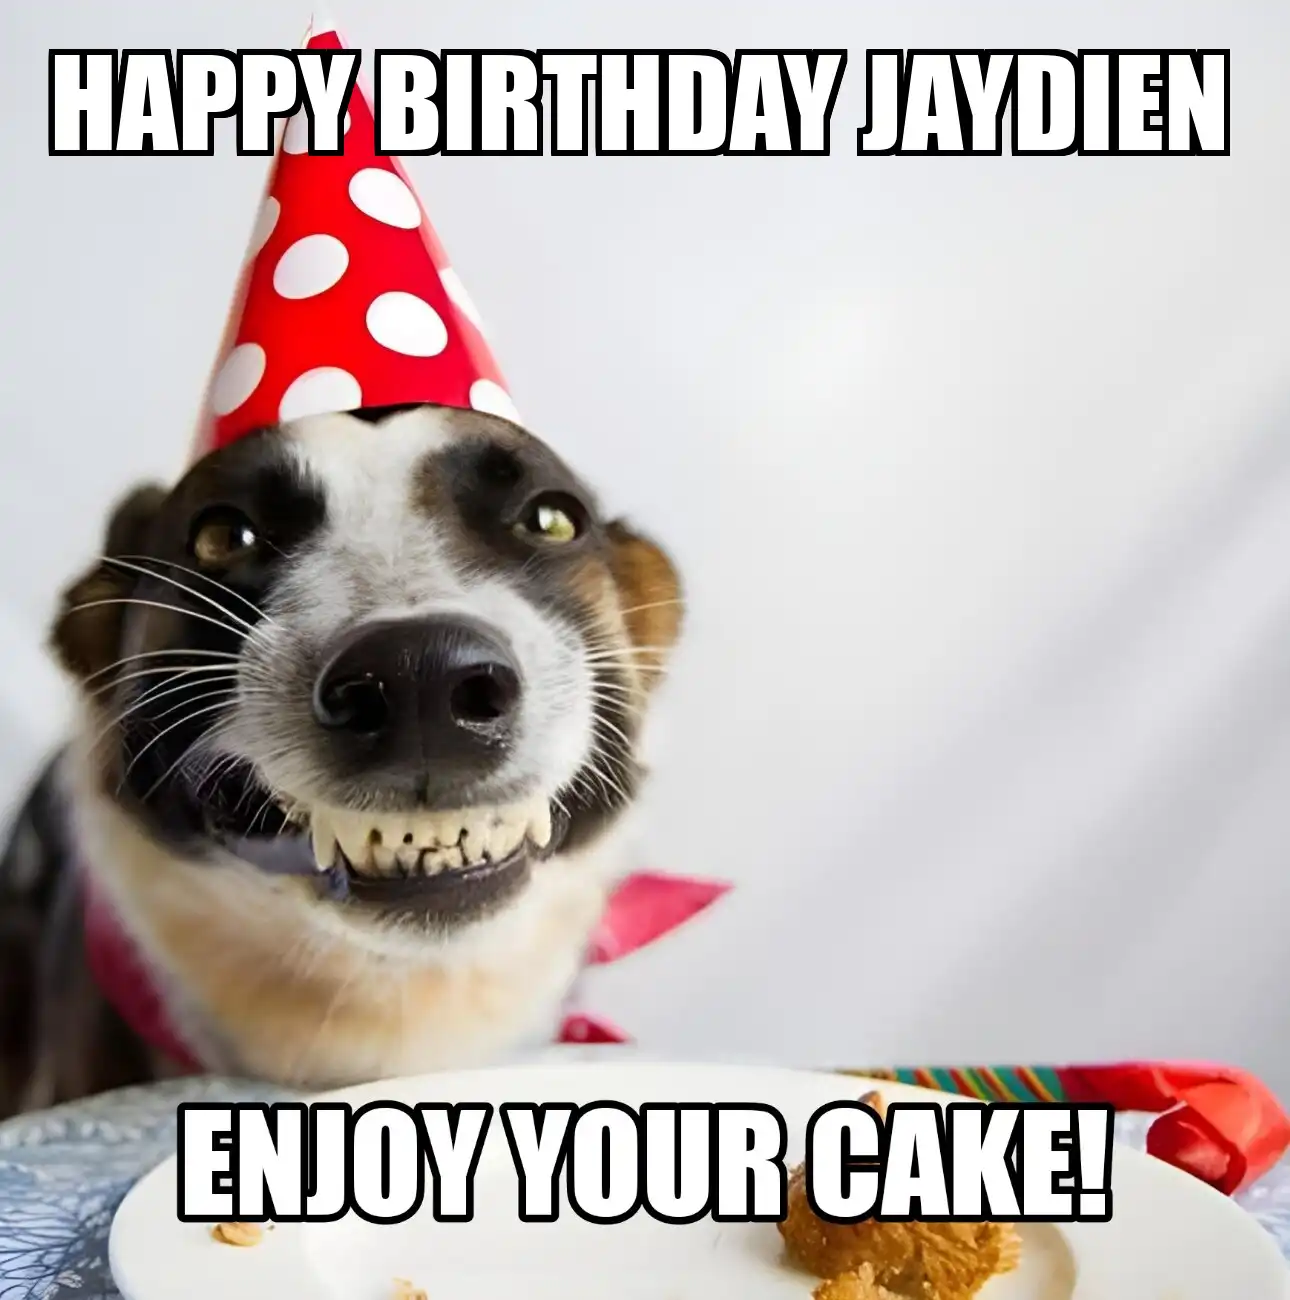 Happy Birthday Jaydien Enjoy Your Cake Dog Meme